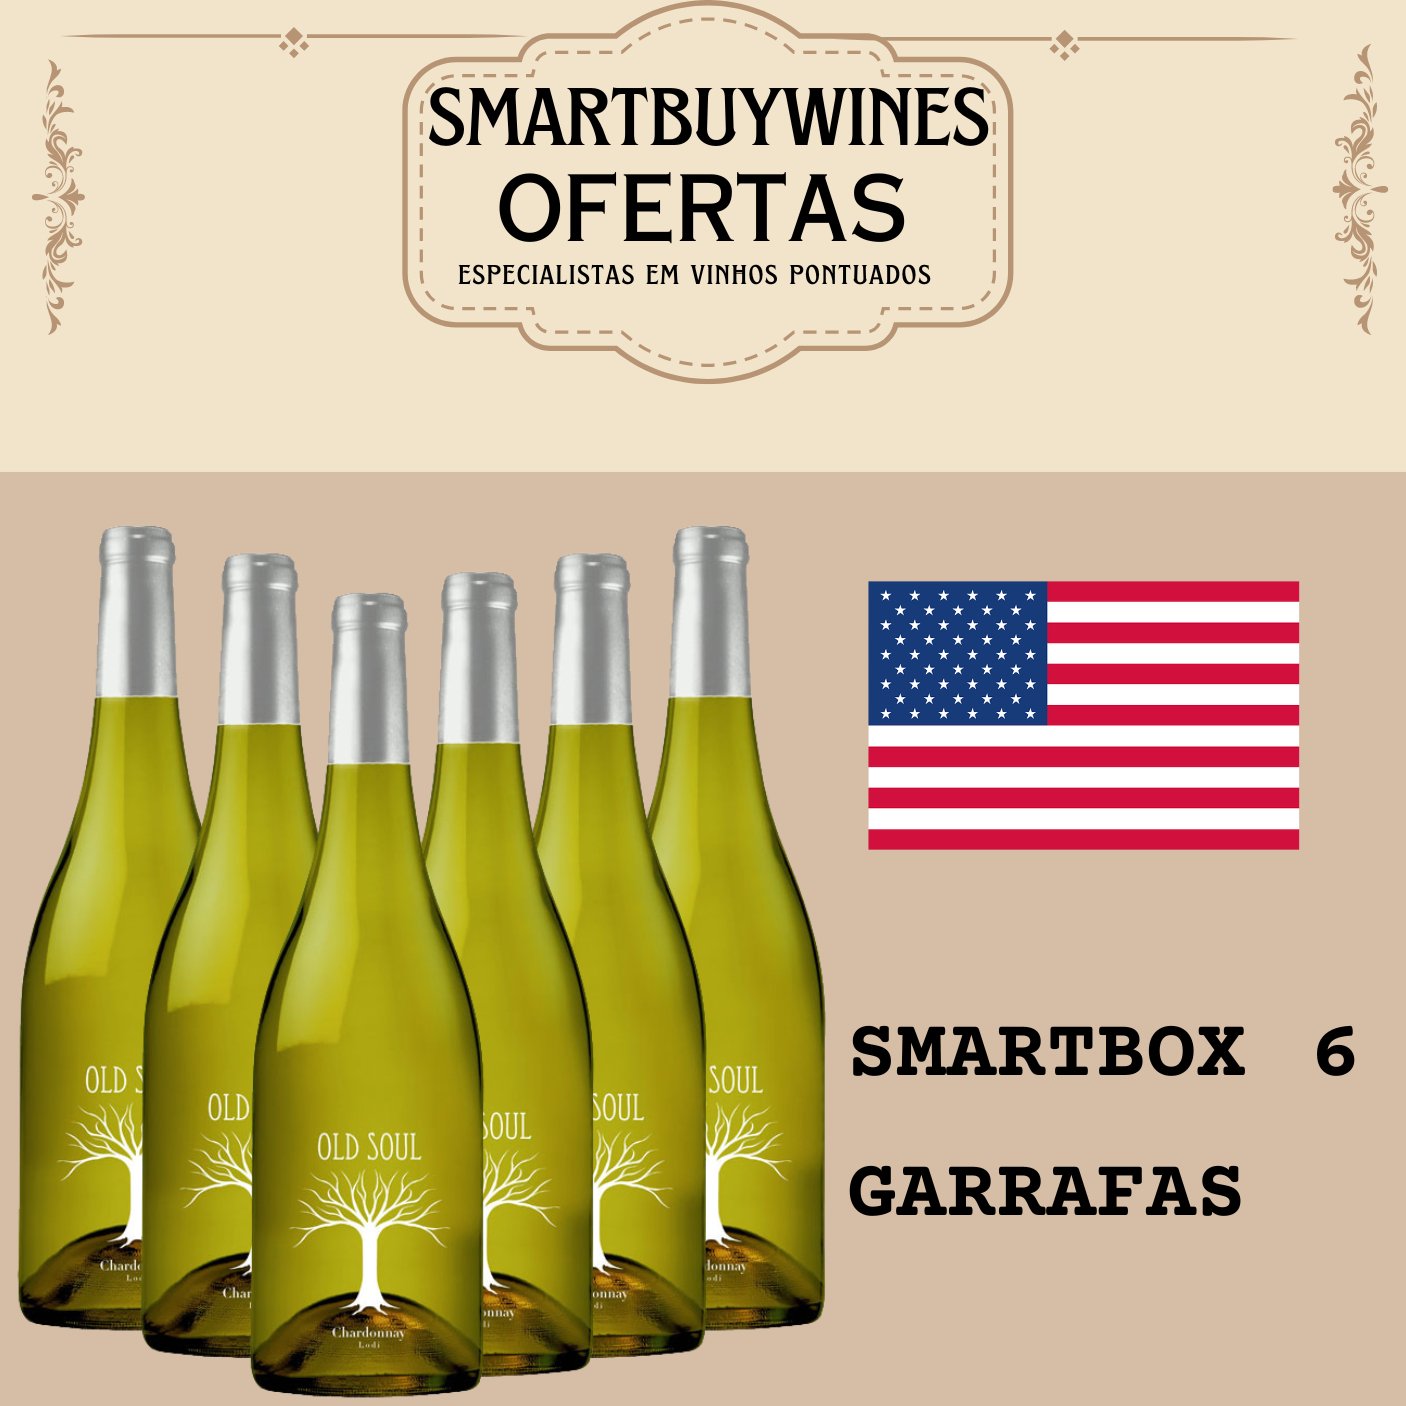 SMARTBOX 6 garrafas - Old Soul Chardonnay, Lodi, California 2020 - SmartBuyWines.com.br